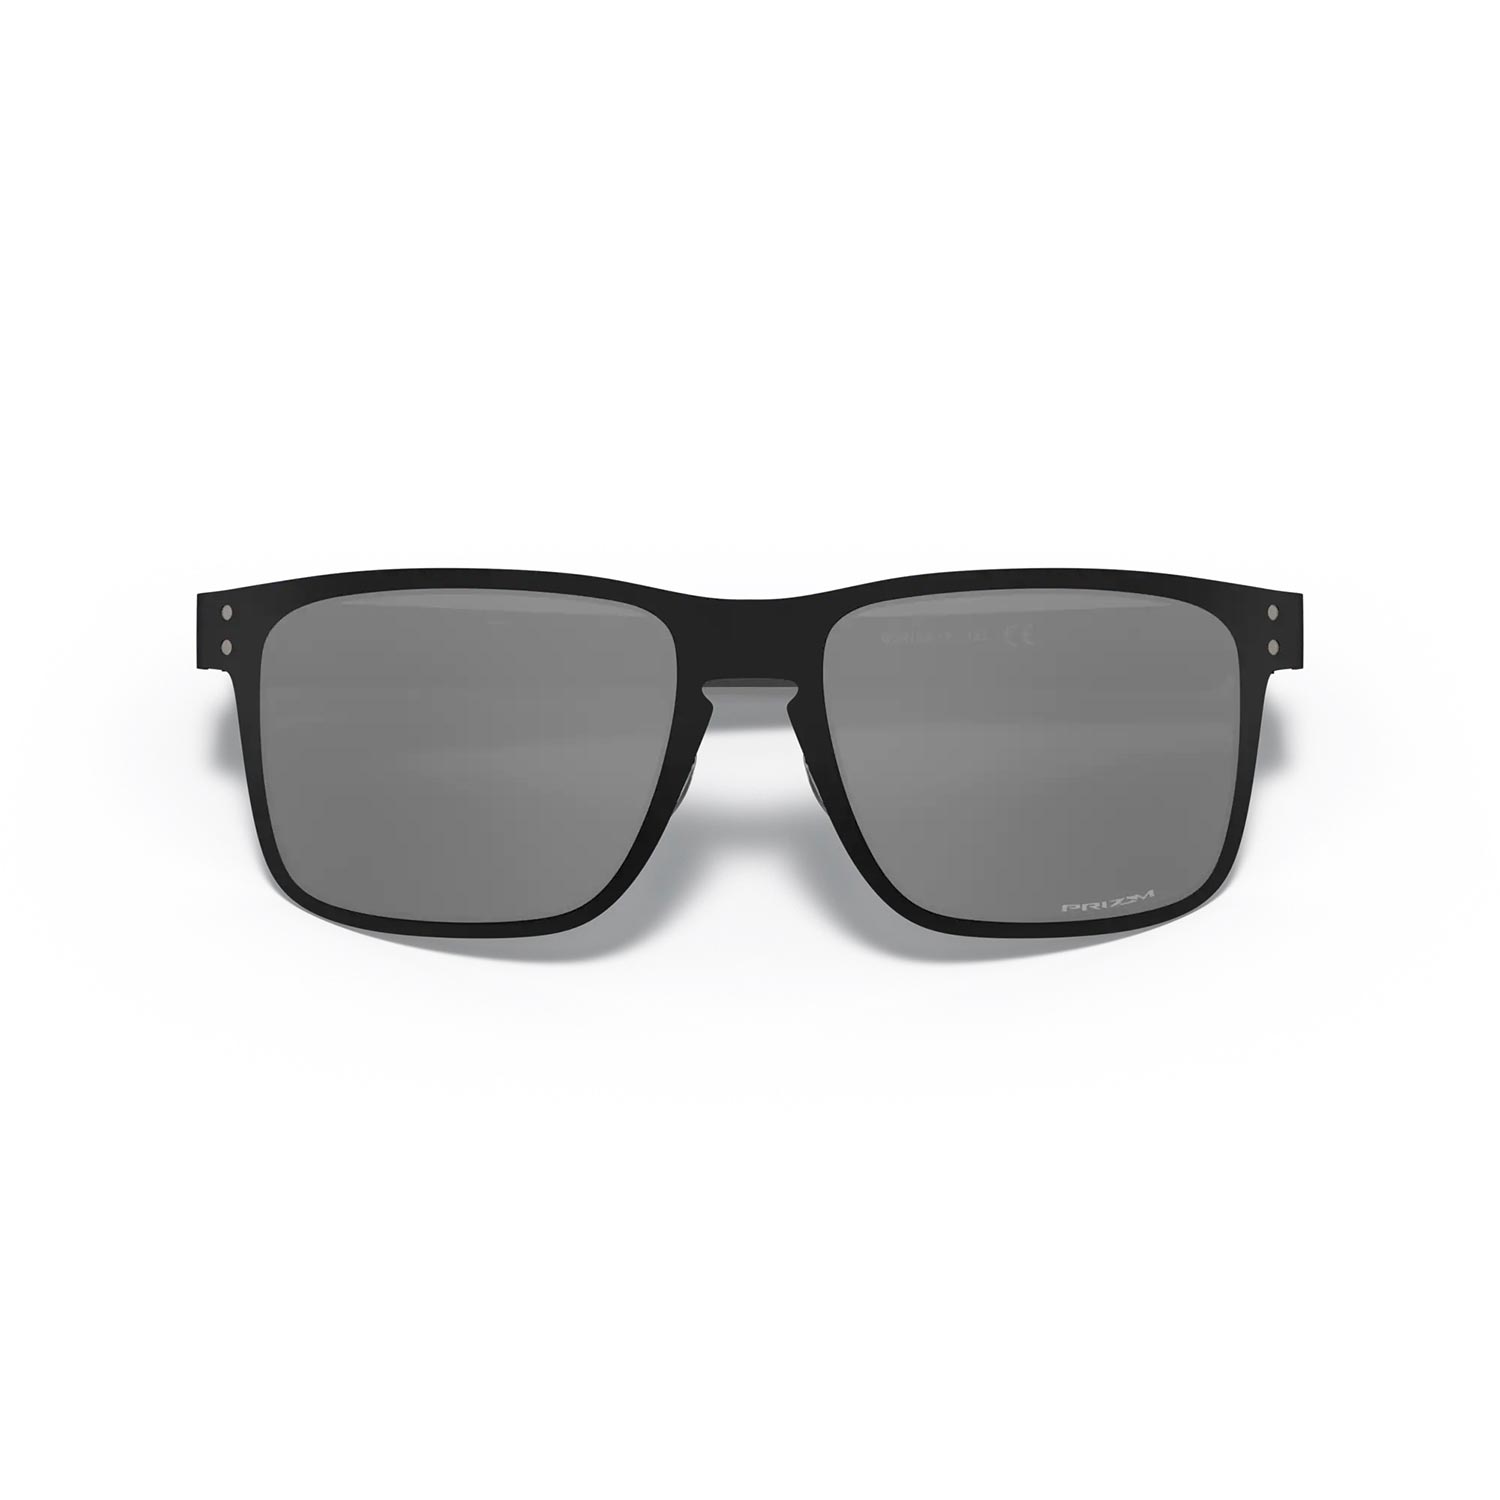 Oakley SI Holbrook Metal Sunglasses